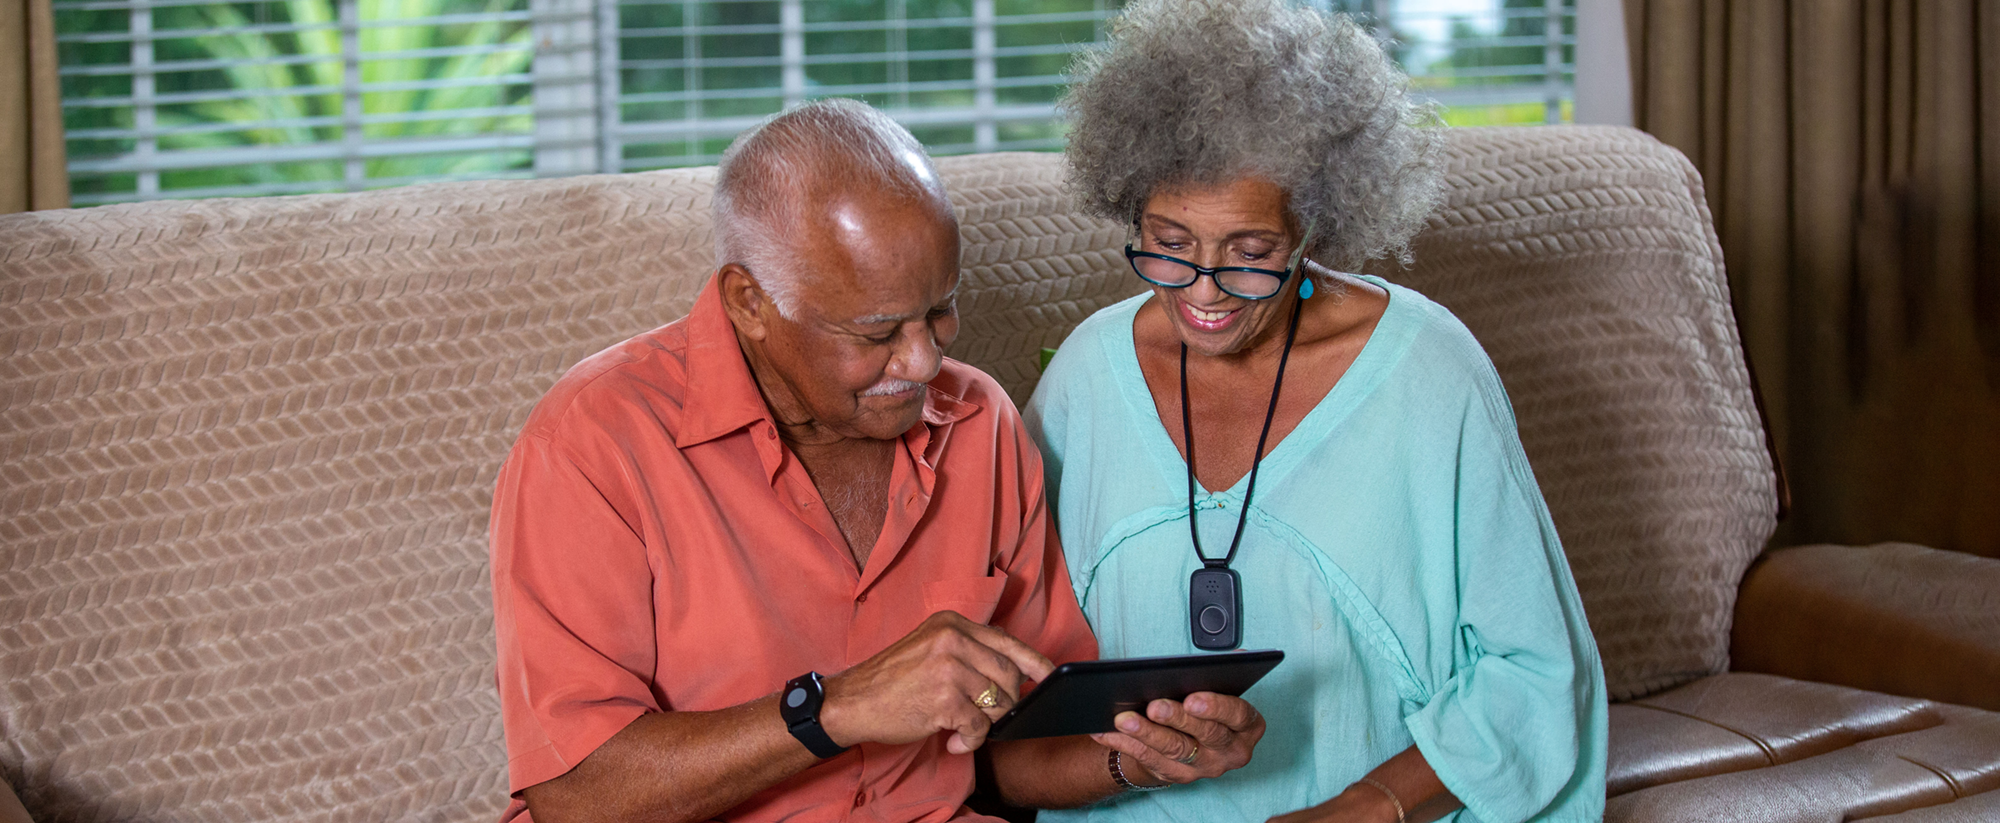 Senior couple using tablet